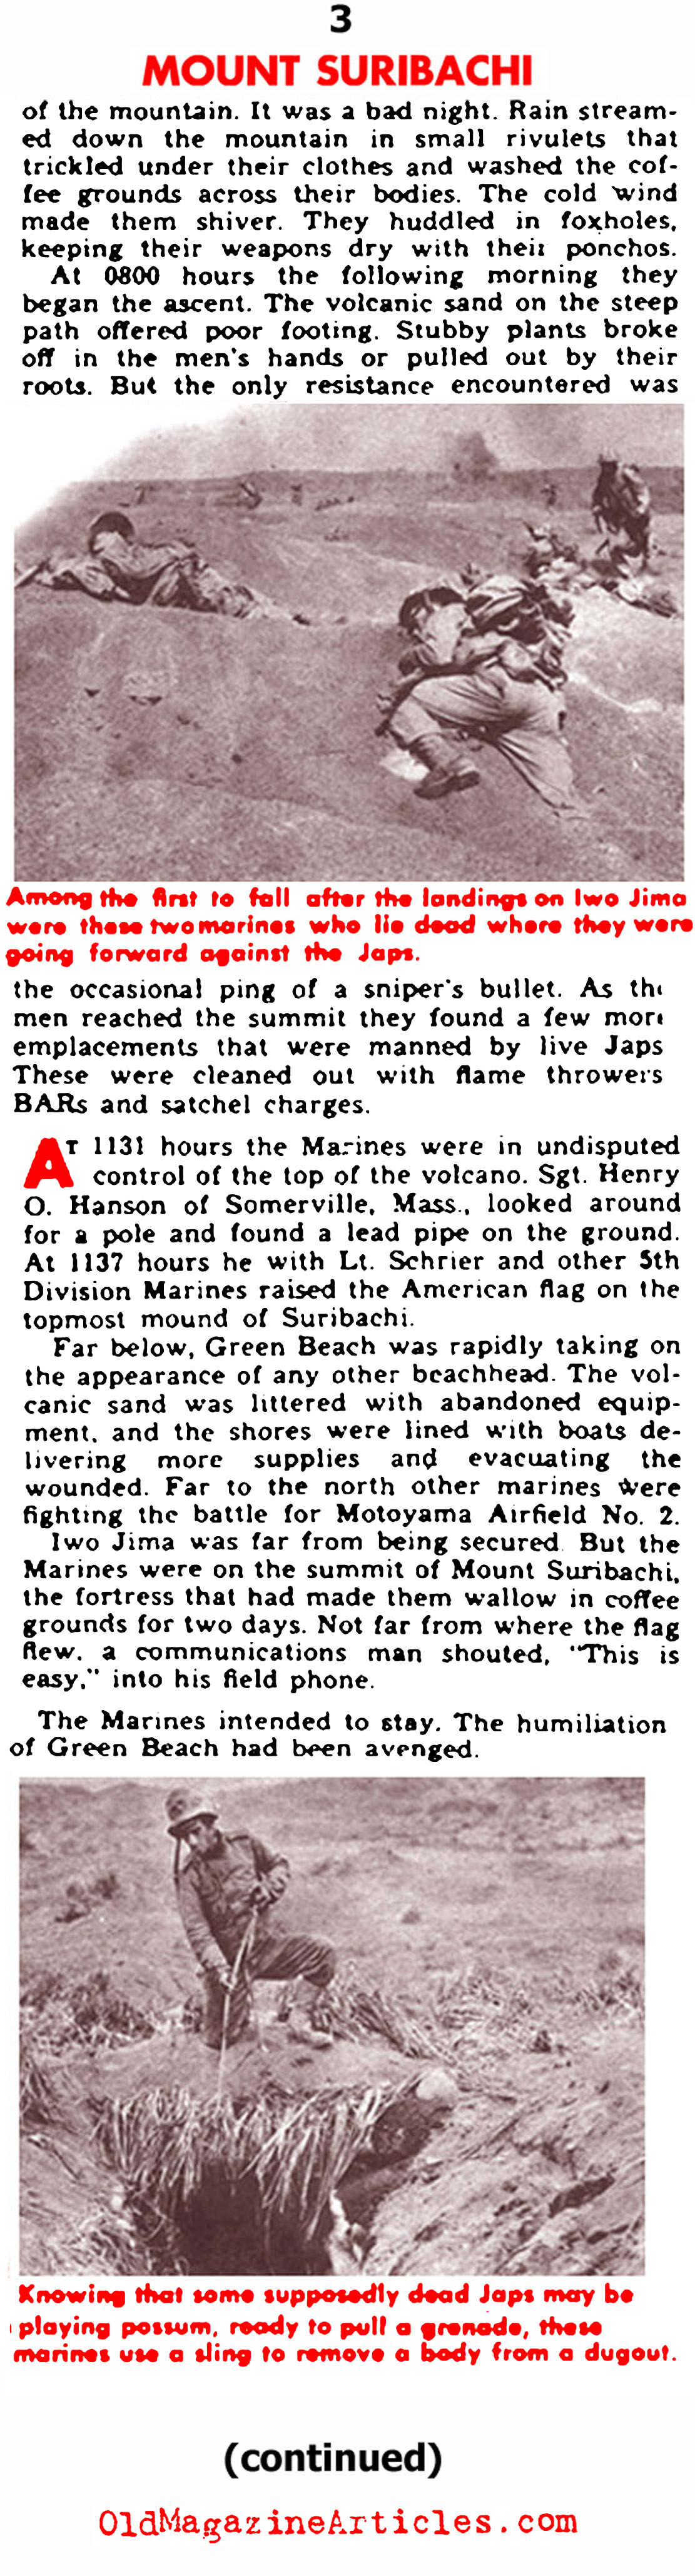 The Battle of Iwo Jima and the First Flag Raising on Mount Suribachi (Yank Magazine, 1945)